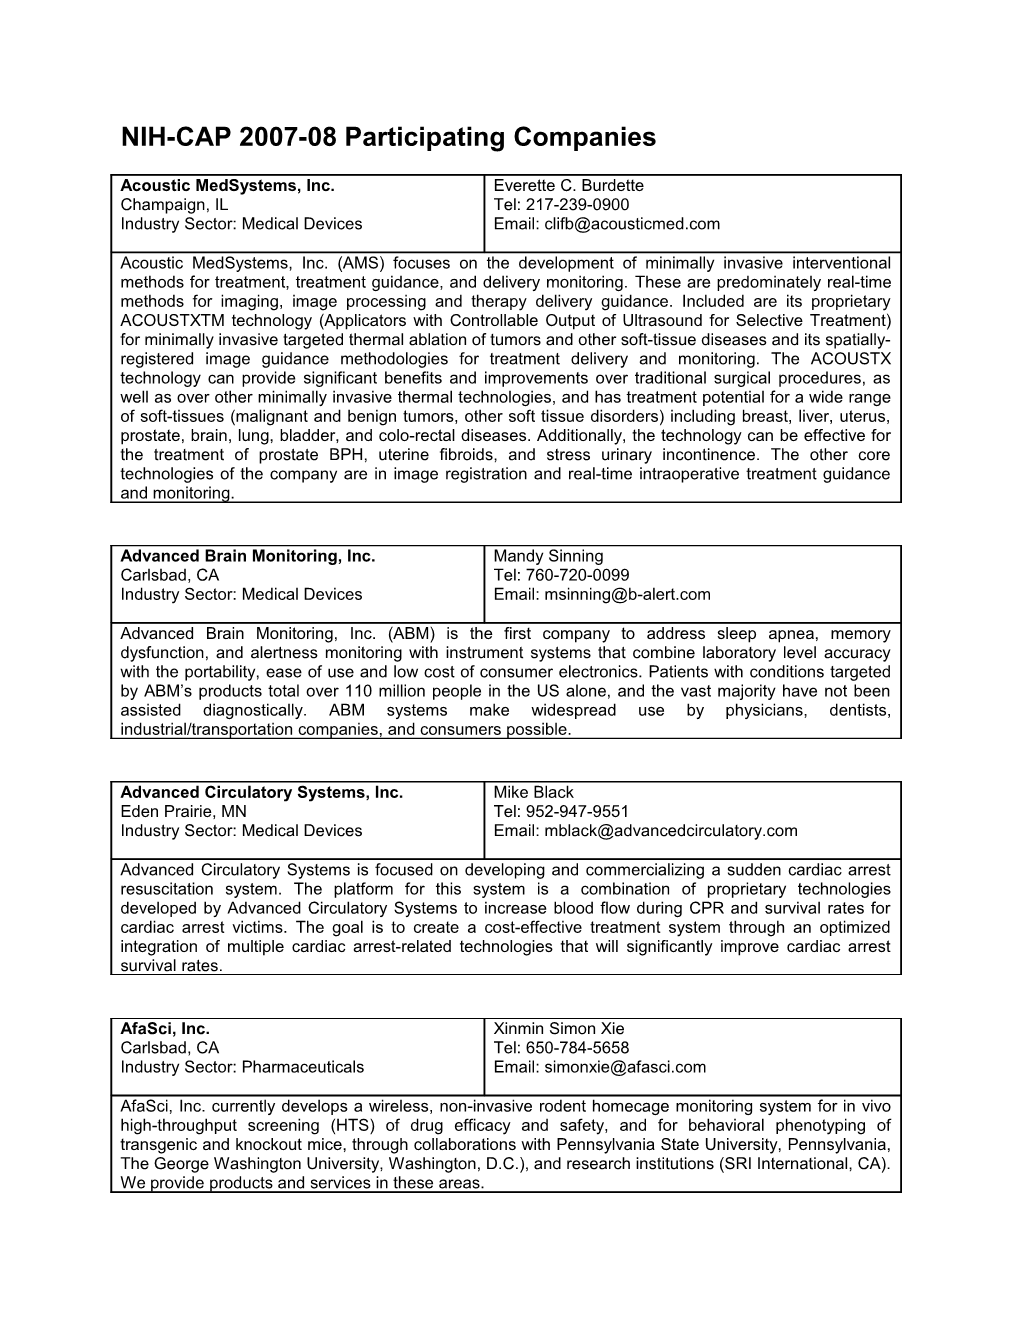 NIH-CAP 2007-08 Participating Companies - 11/2007